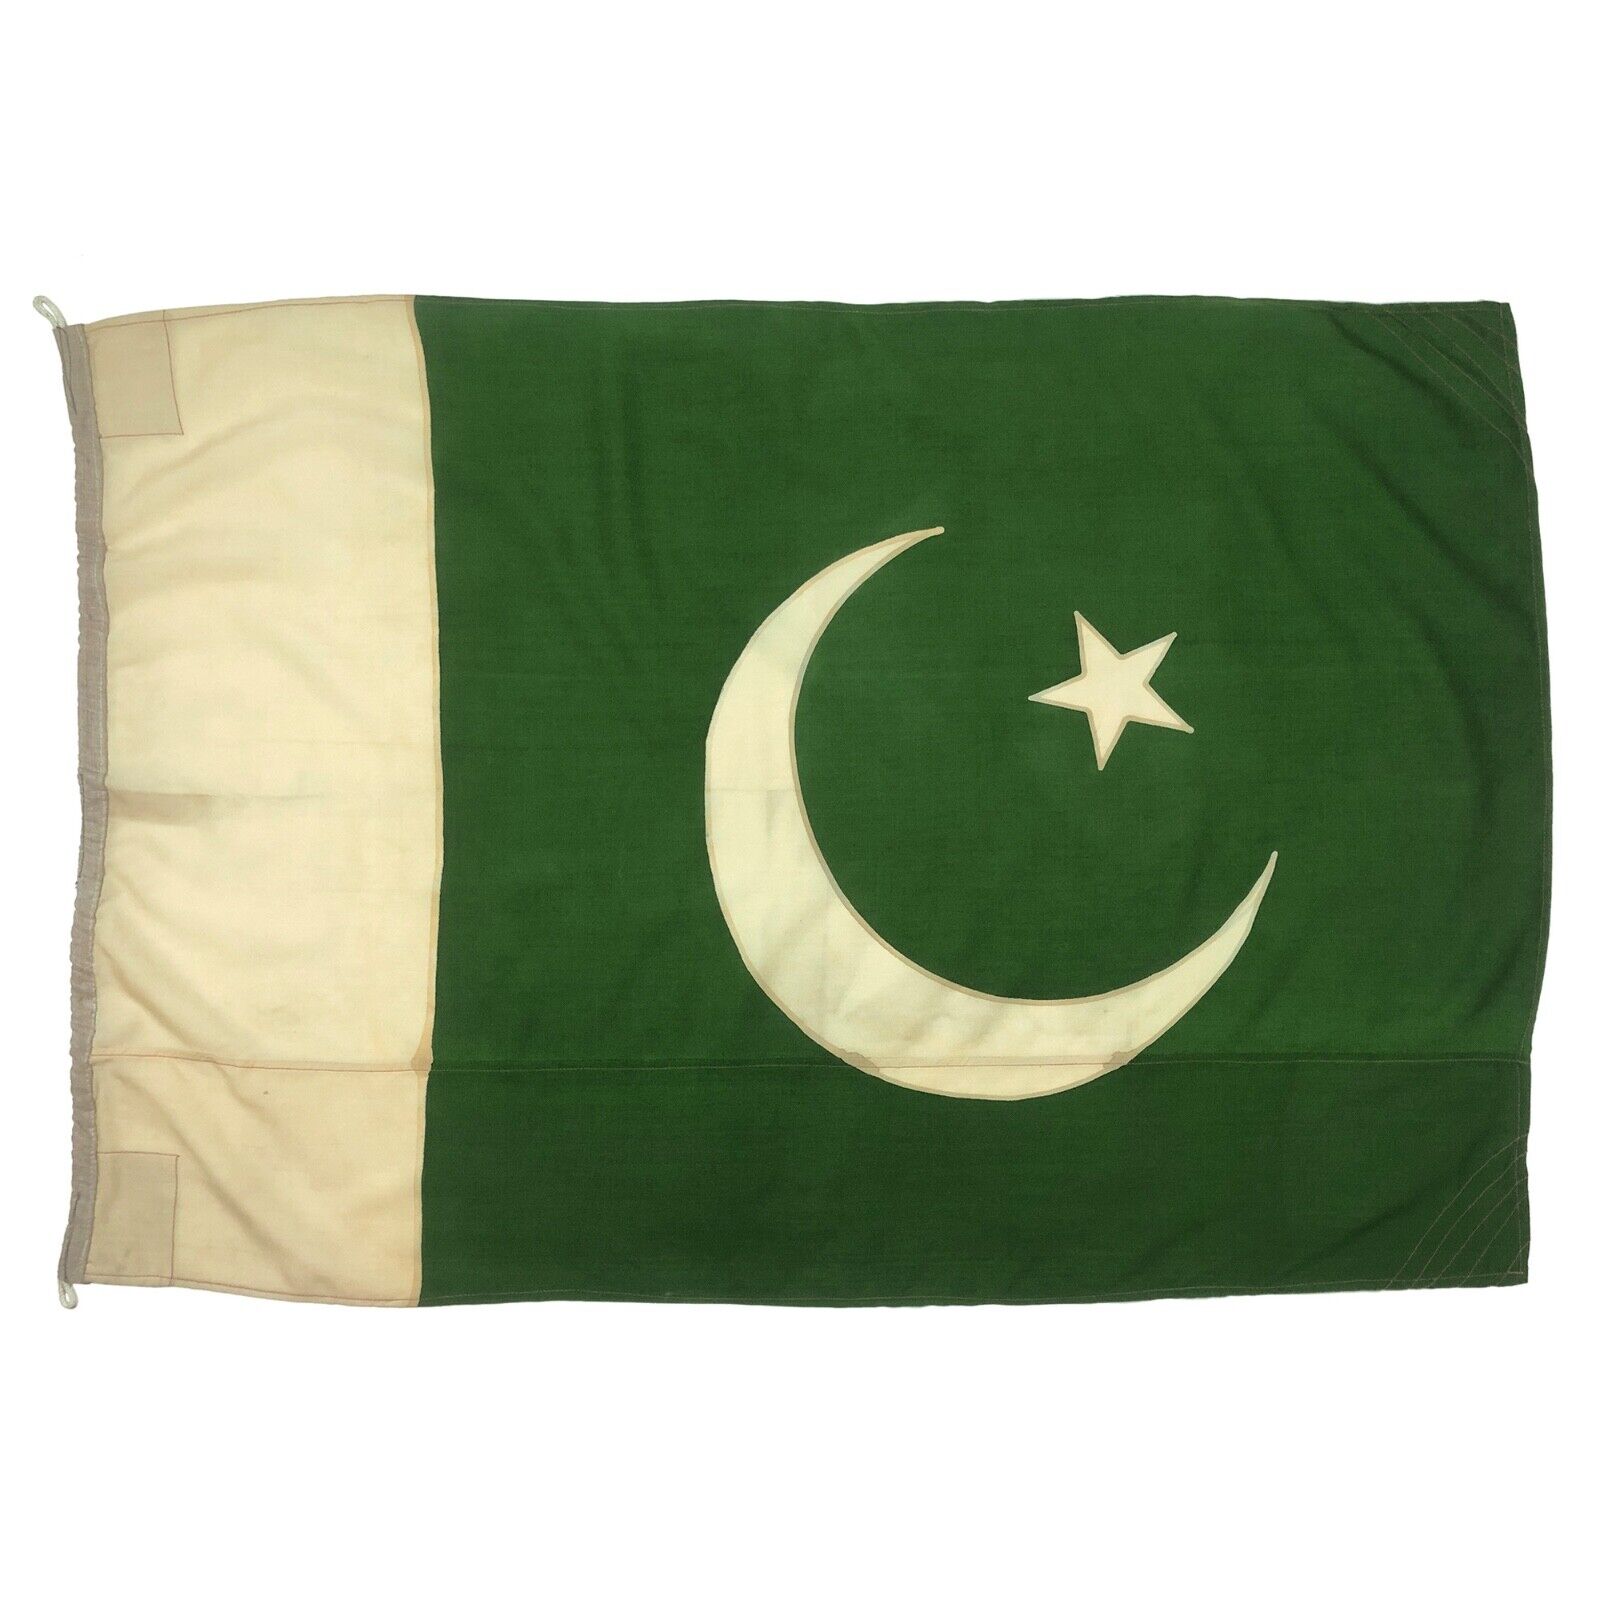 Vintage Wool Pakistan Flag Nautical Cloth Old Islam Muslim Crescent Moon Star